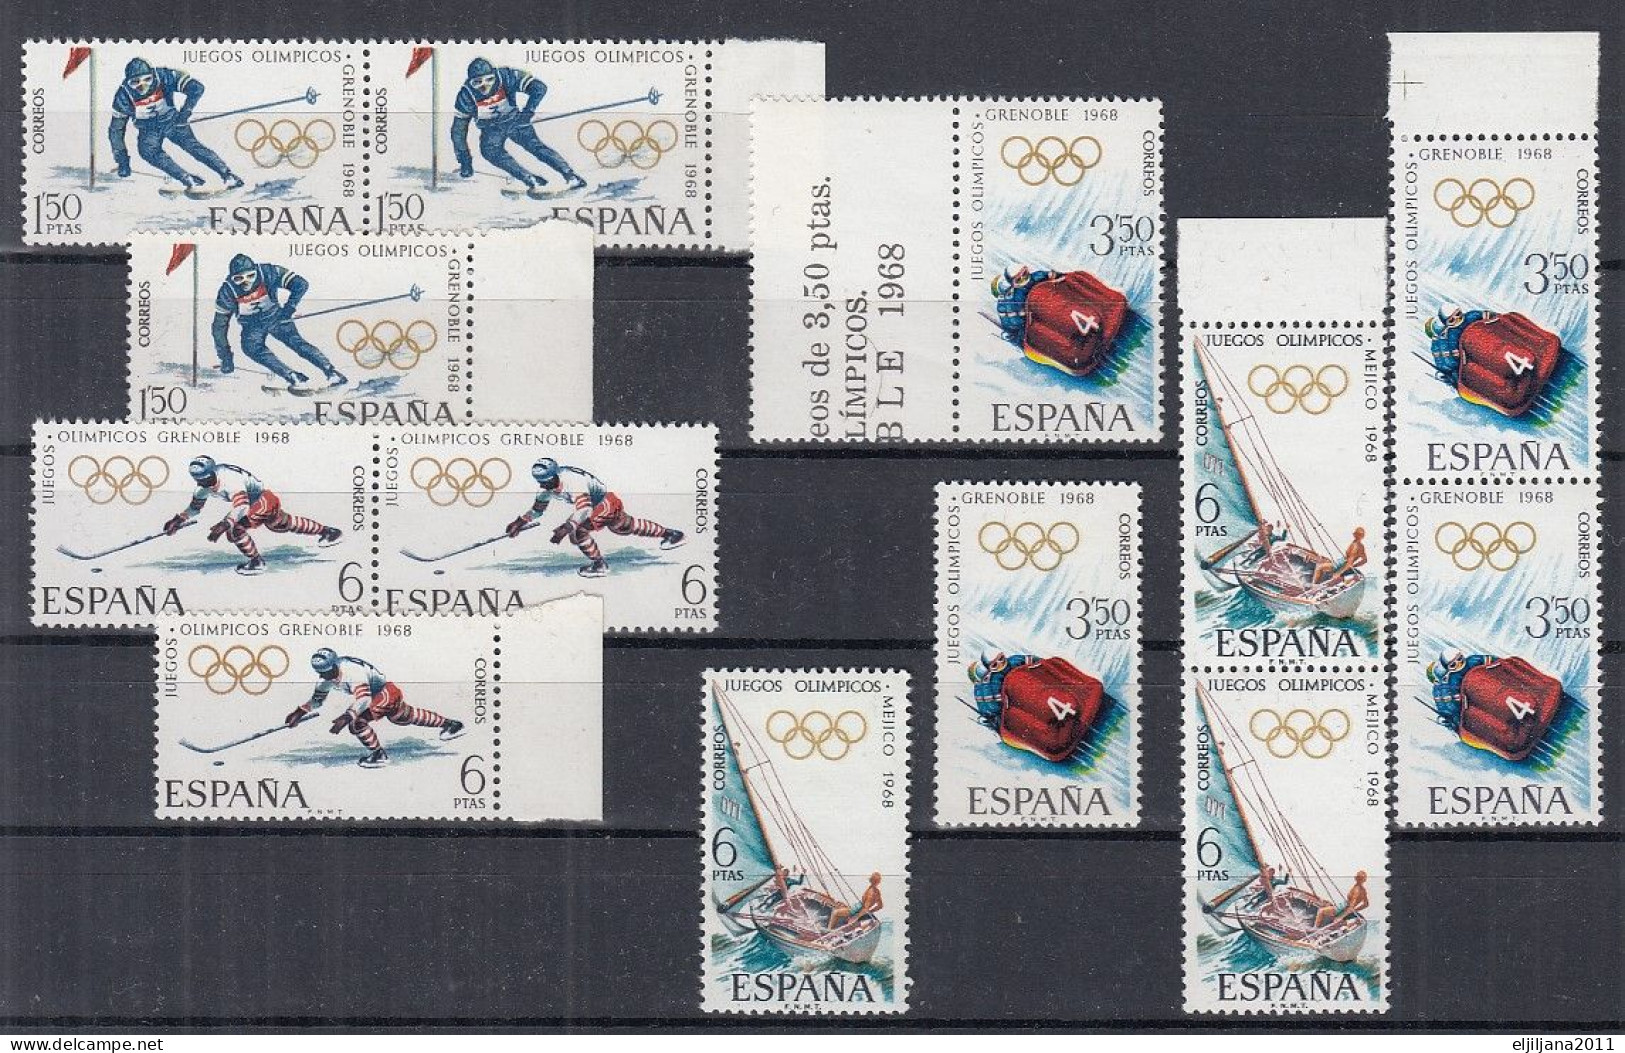 ⁕ SPAIN / ESPANA 1968 ⁕ Olympic Games Mi.1735-1737 & Mi.1780 ⁕ 13v MNH - Nuovi